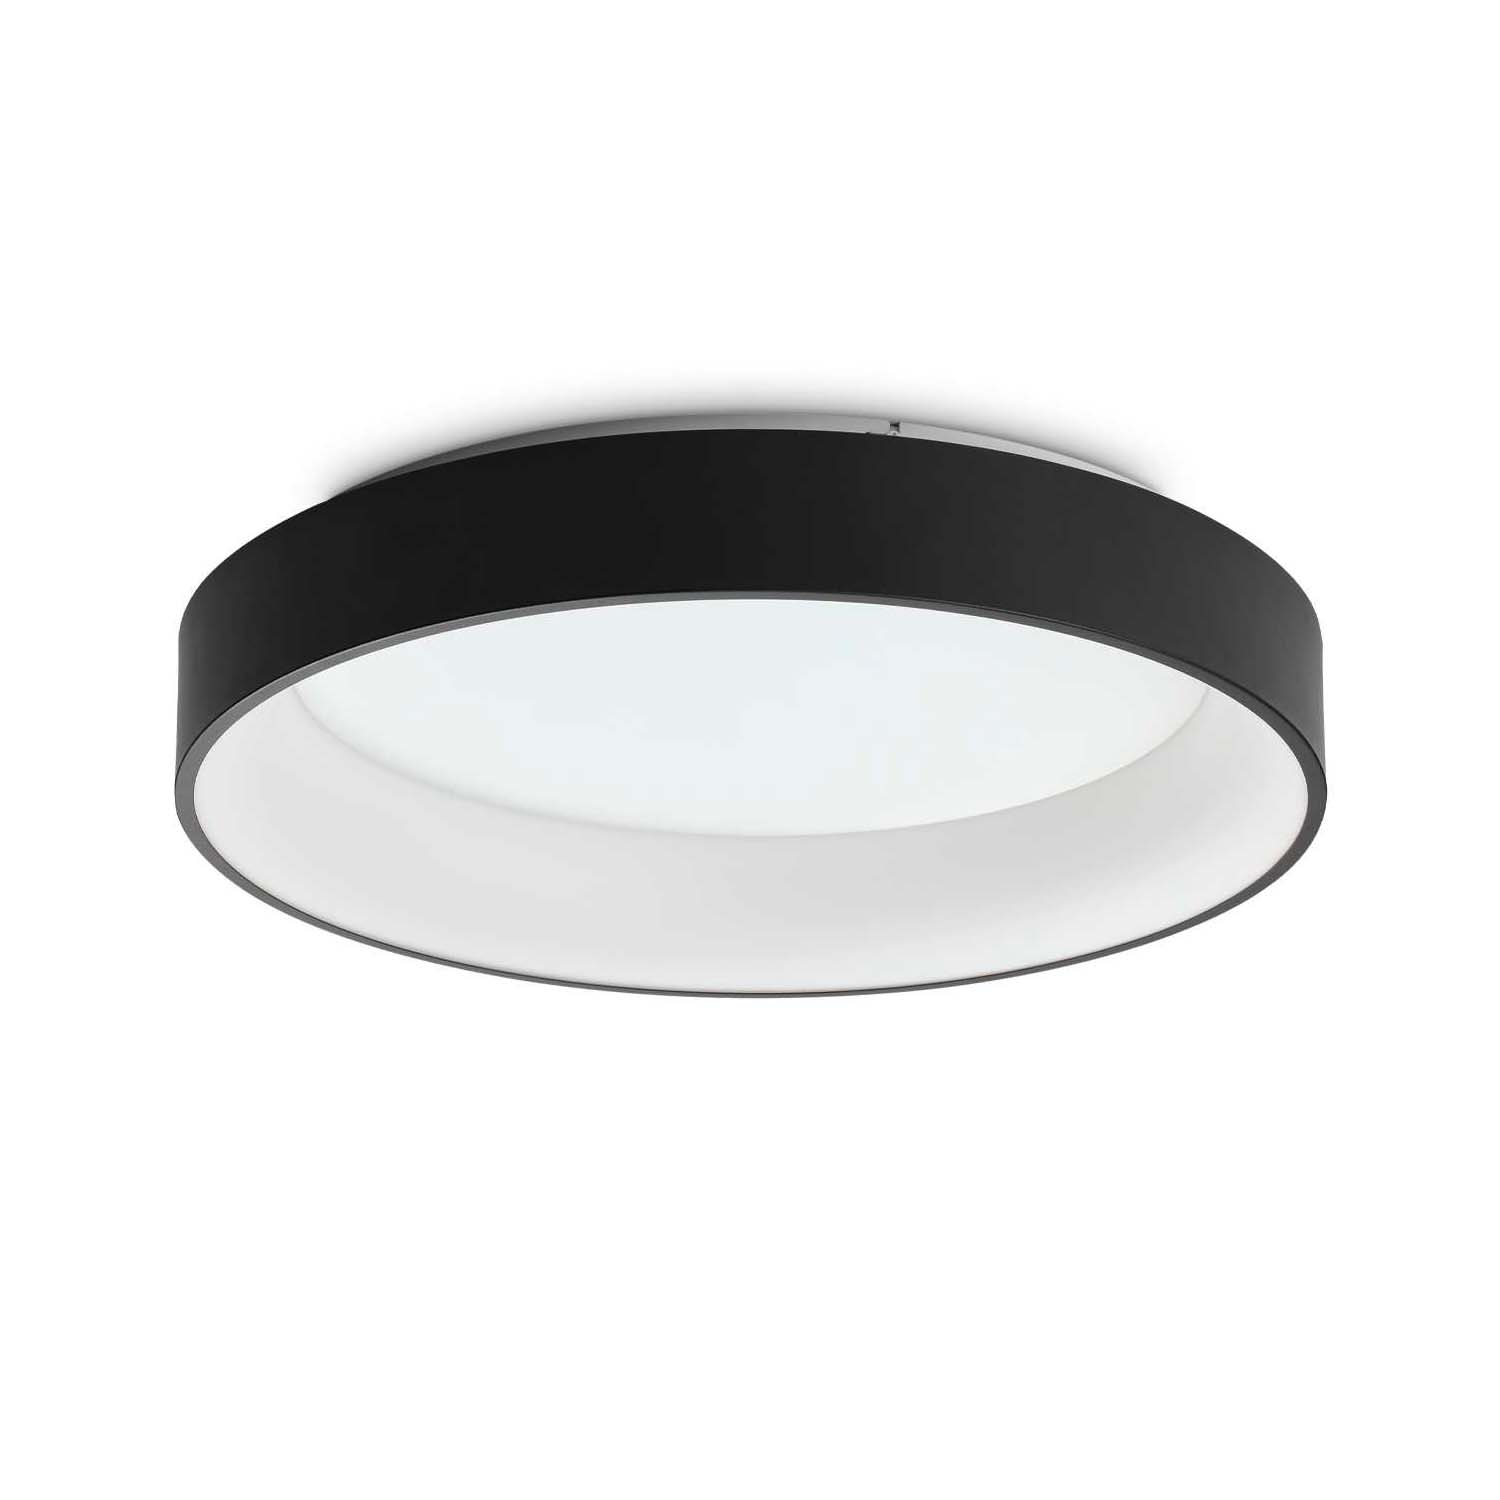 ZIGGY - Round designer ceiling light, white or black, large diameter